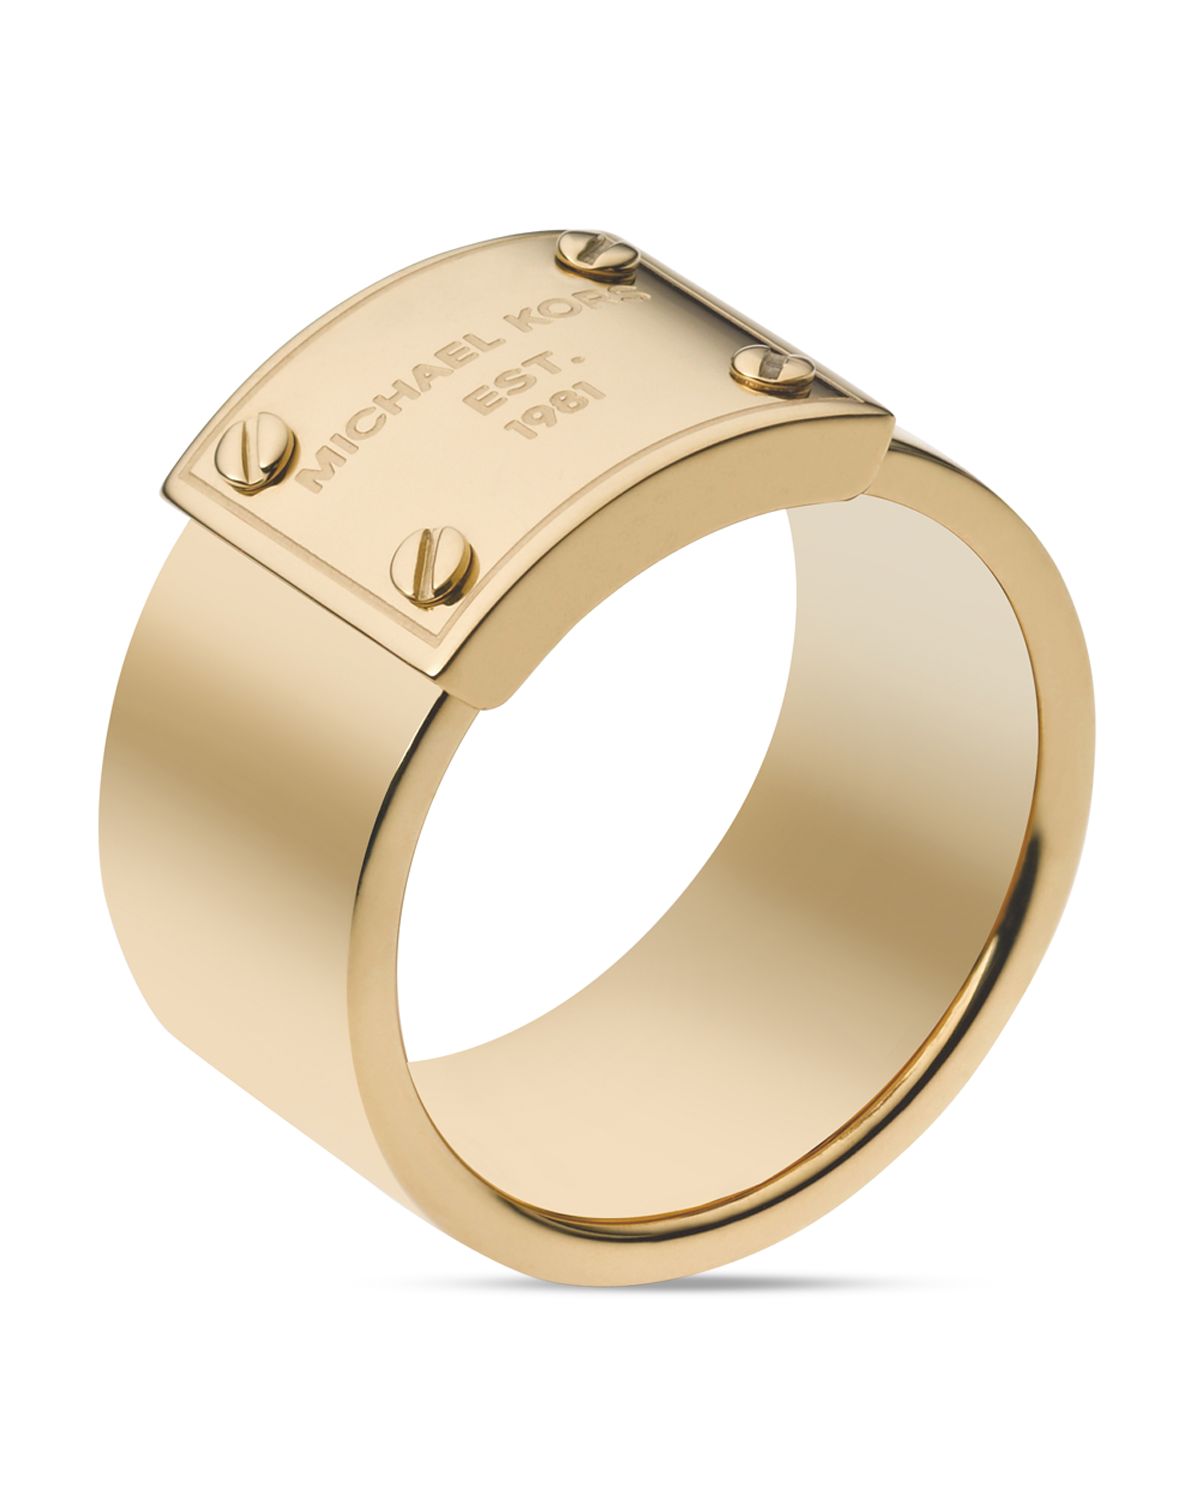 Michael Kors Logo Plate Ring in Gold (Metallic) - Lyst